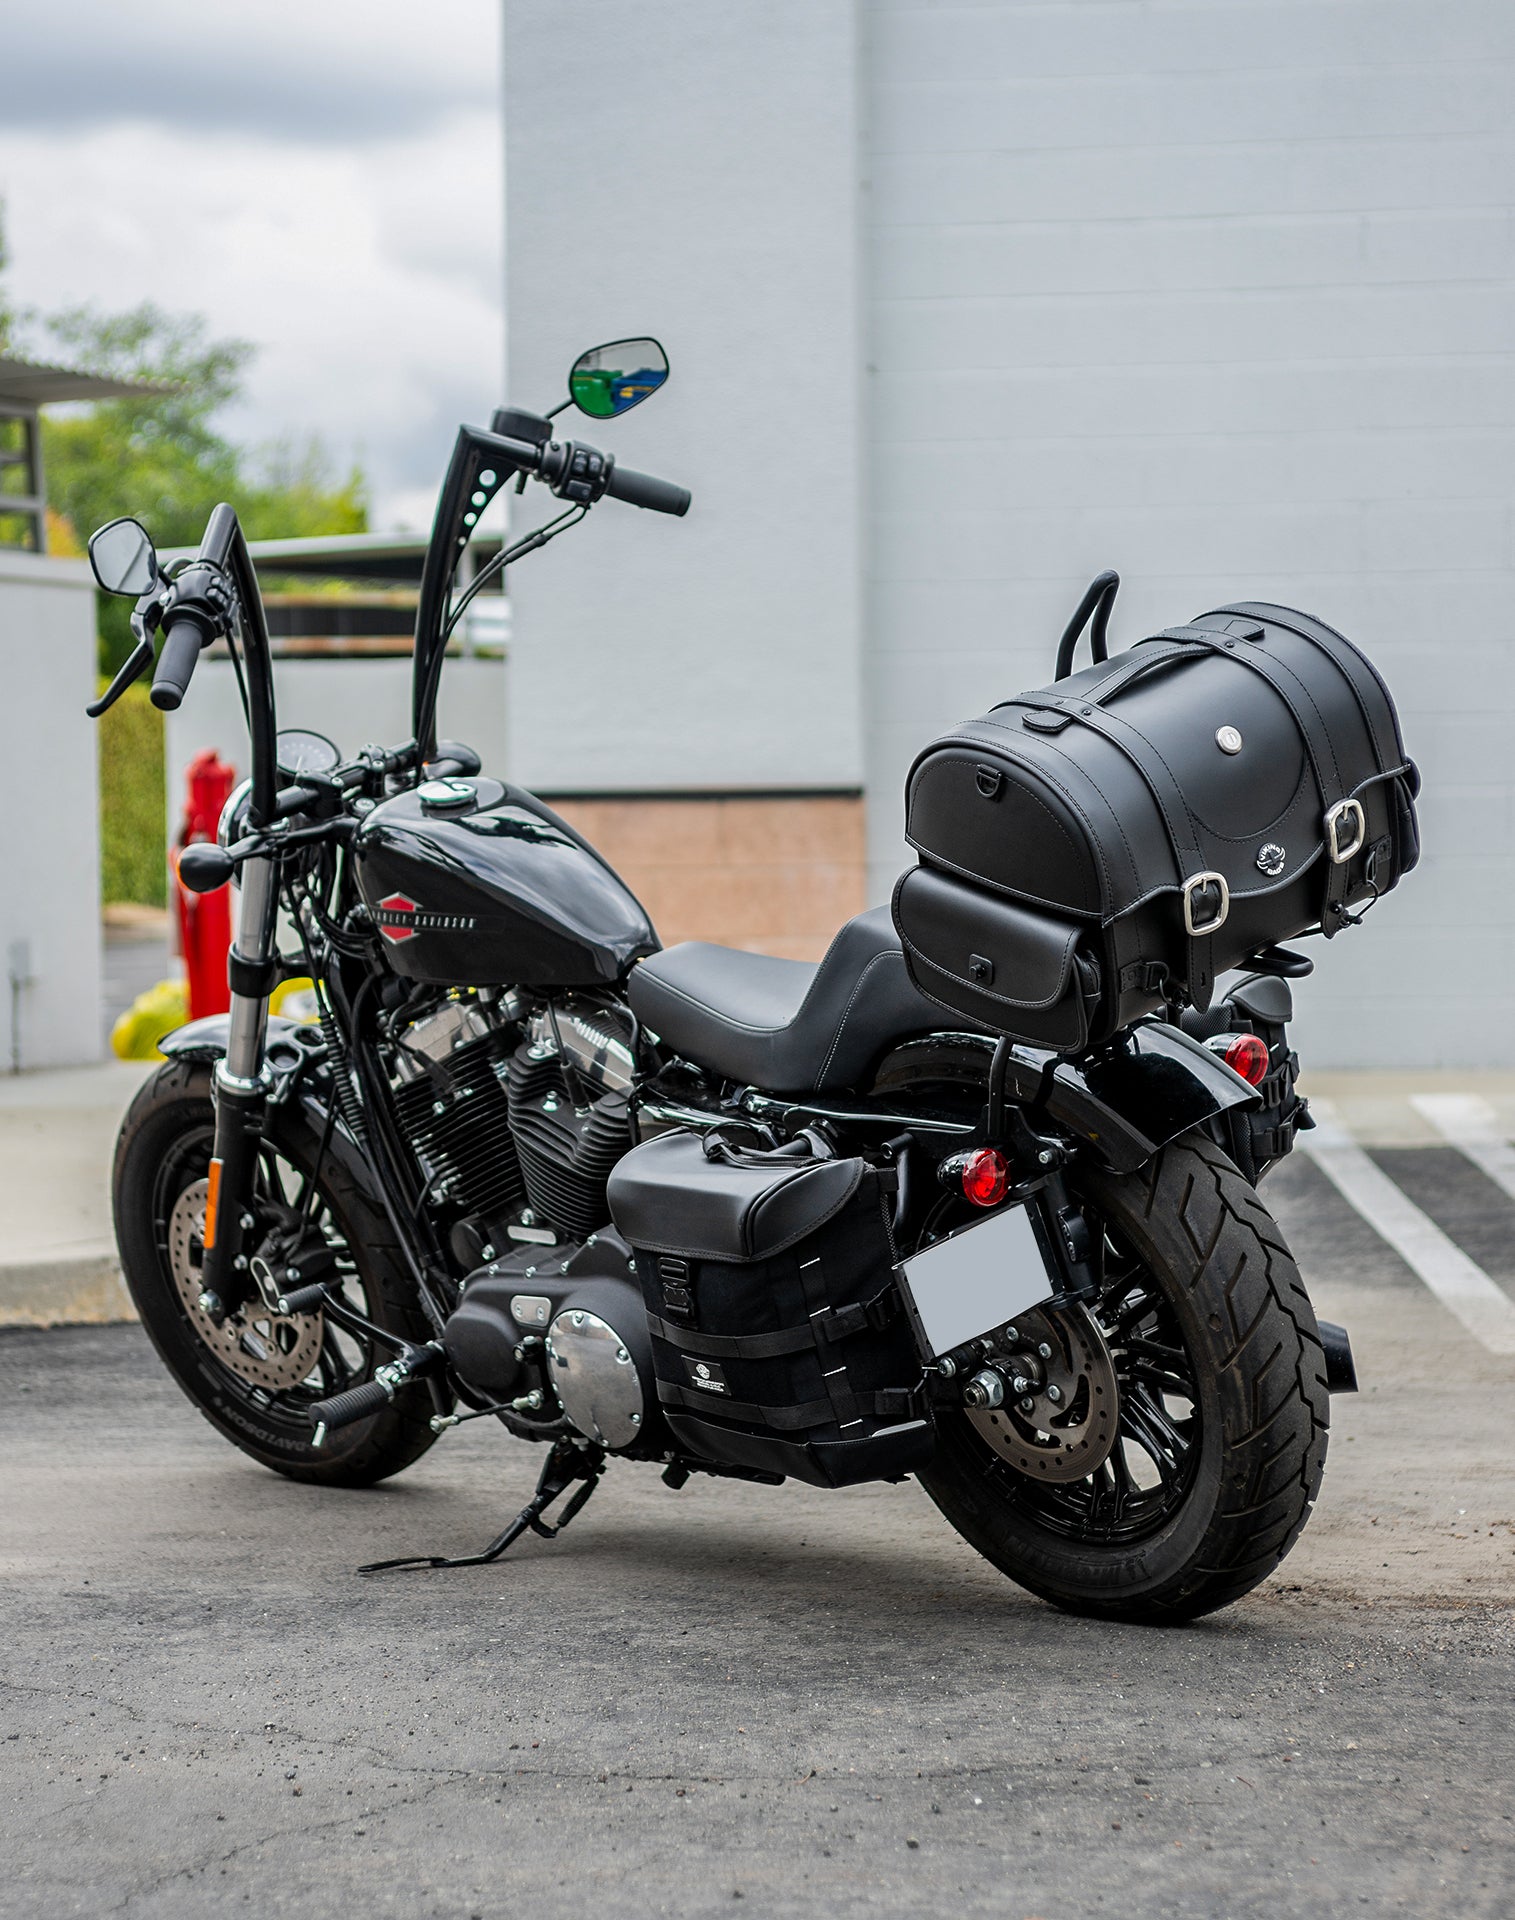 18L - Century Medium Triumph Leather Motorcycle Roll Bag